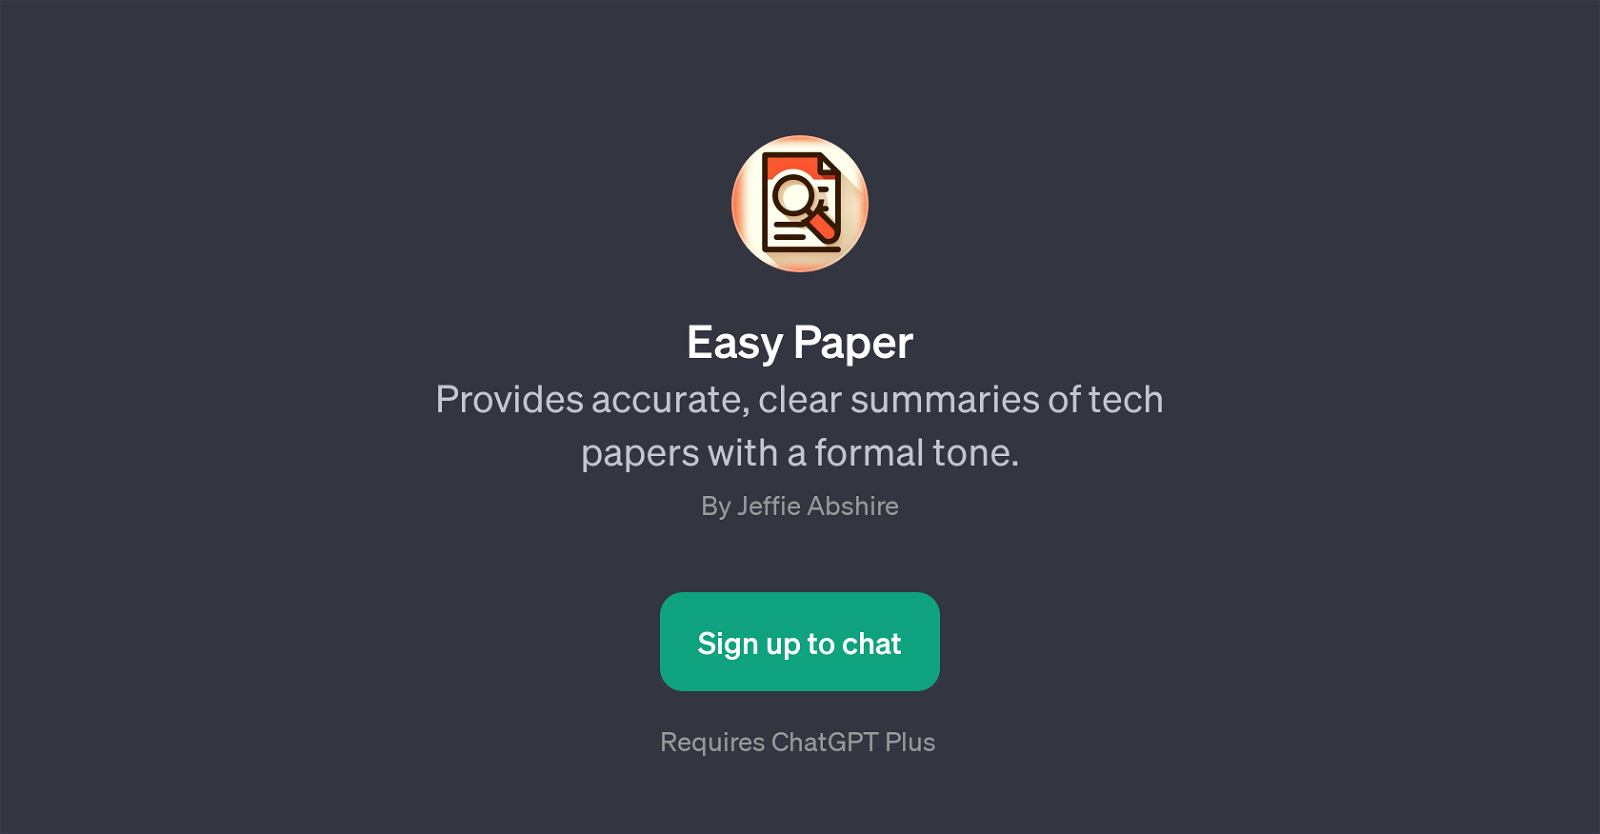 Easy Paper website